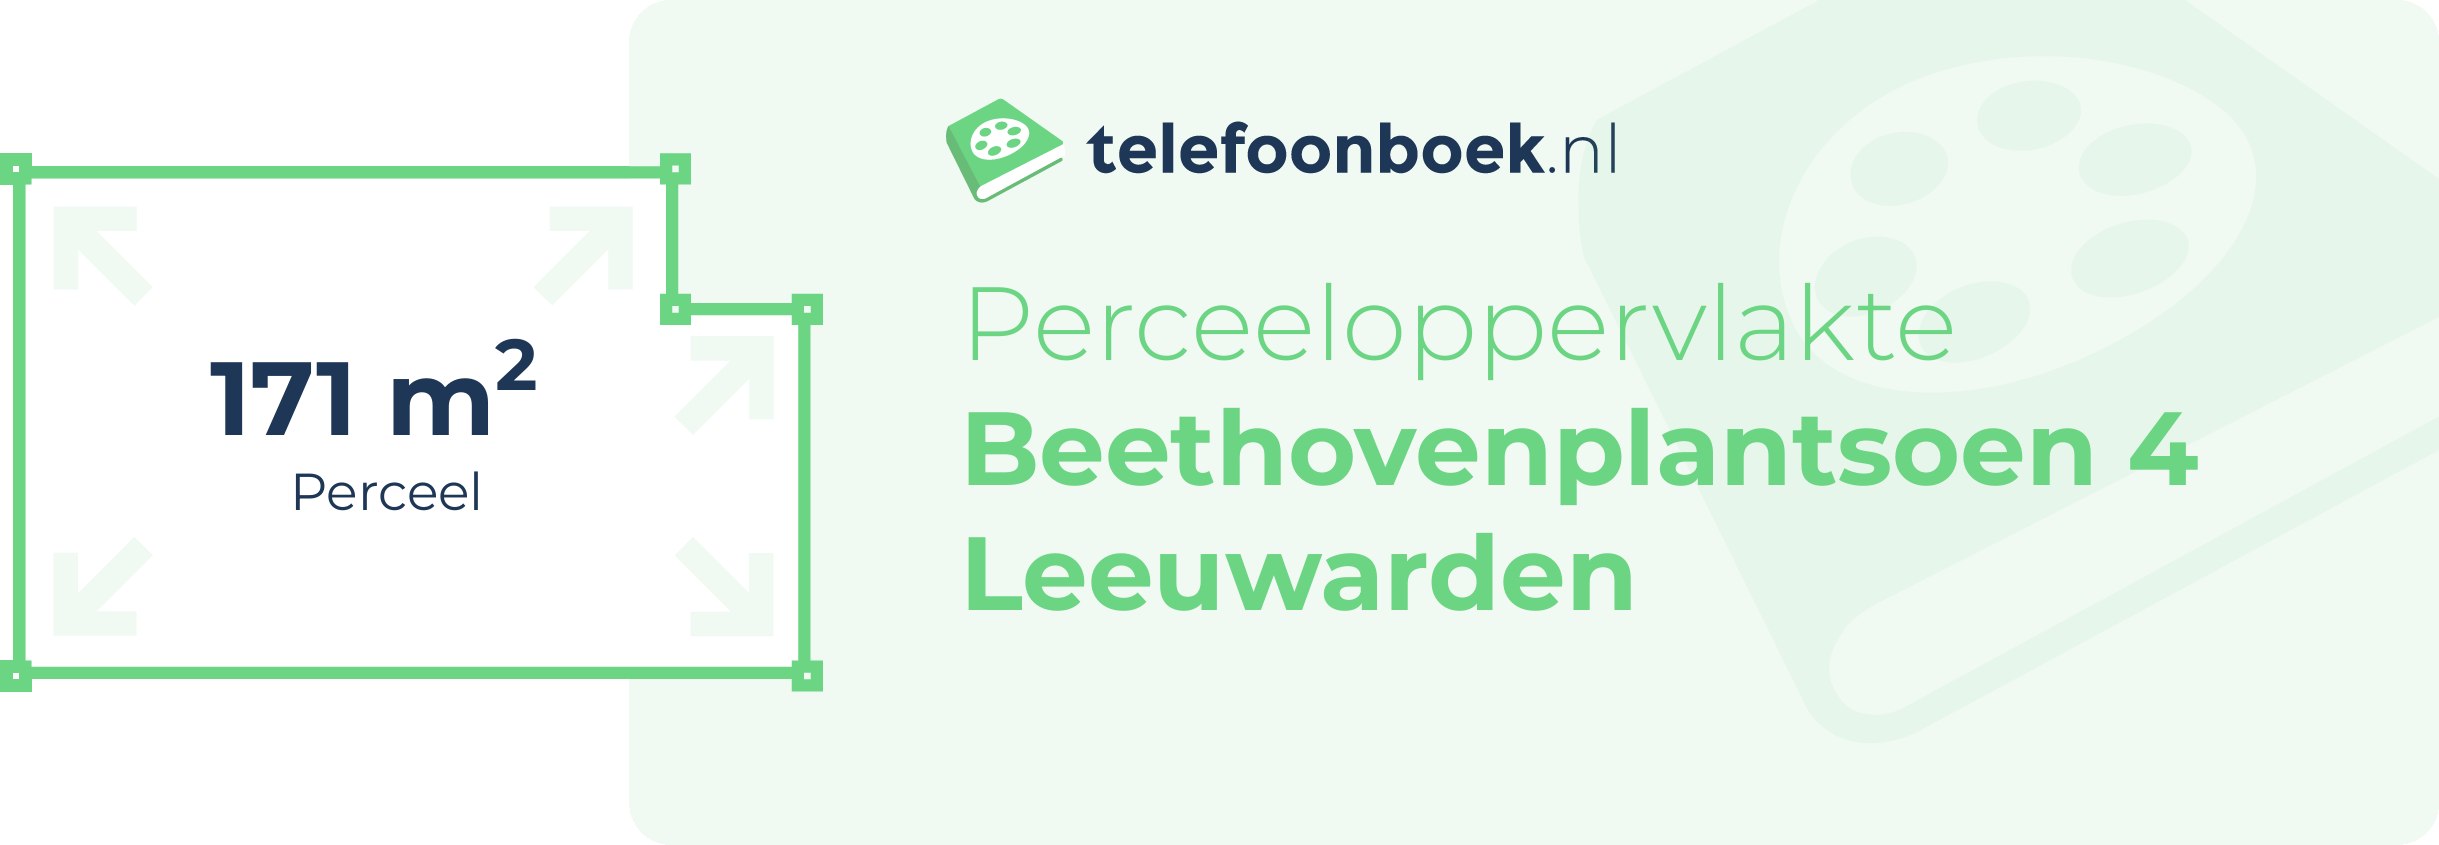 Perceeloppervlakte Beethovenplantsoen 4 Leeuwarden